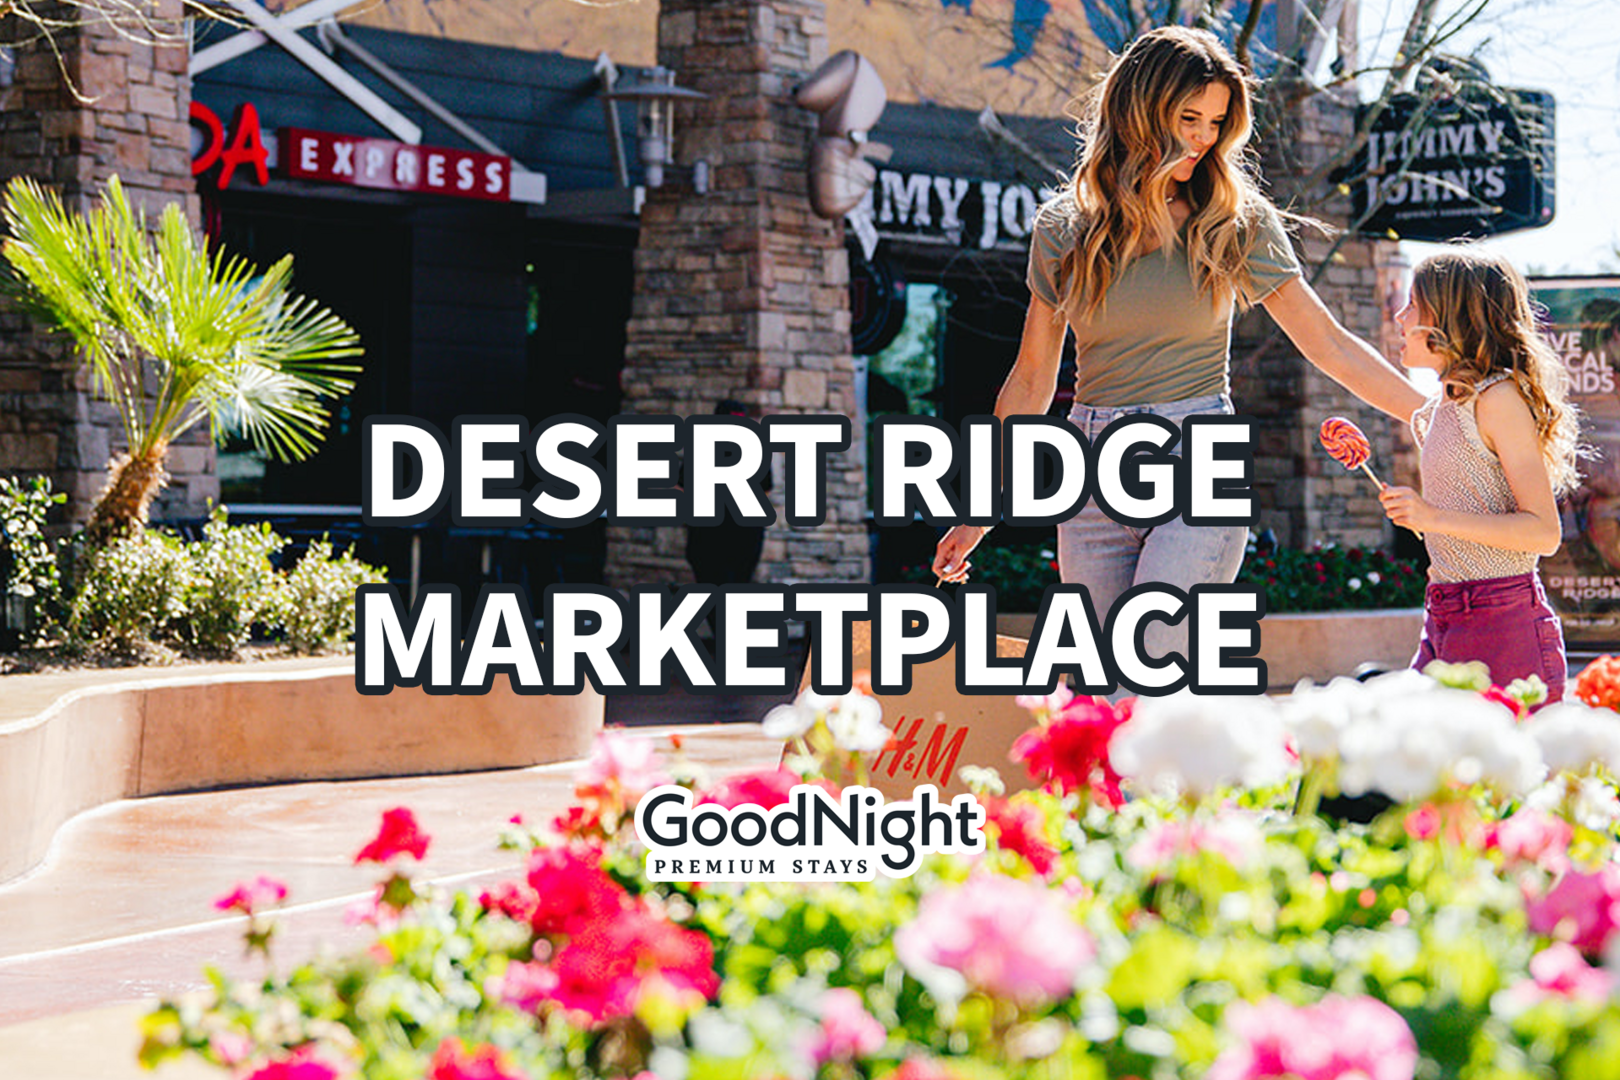 13 mins: Desert Ridge Marketplace